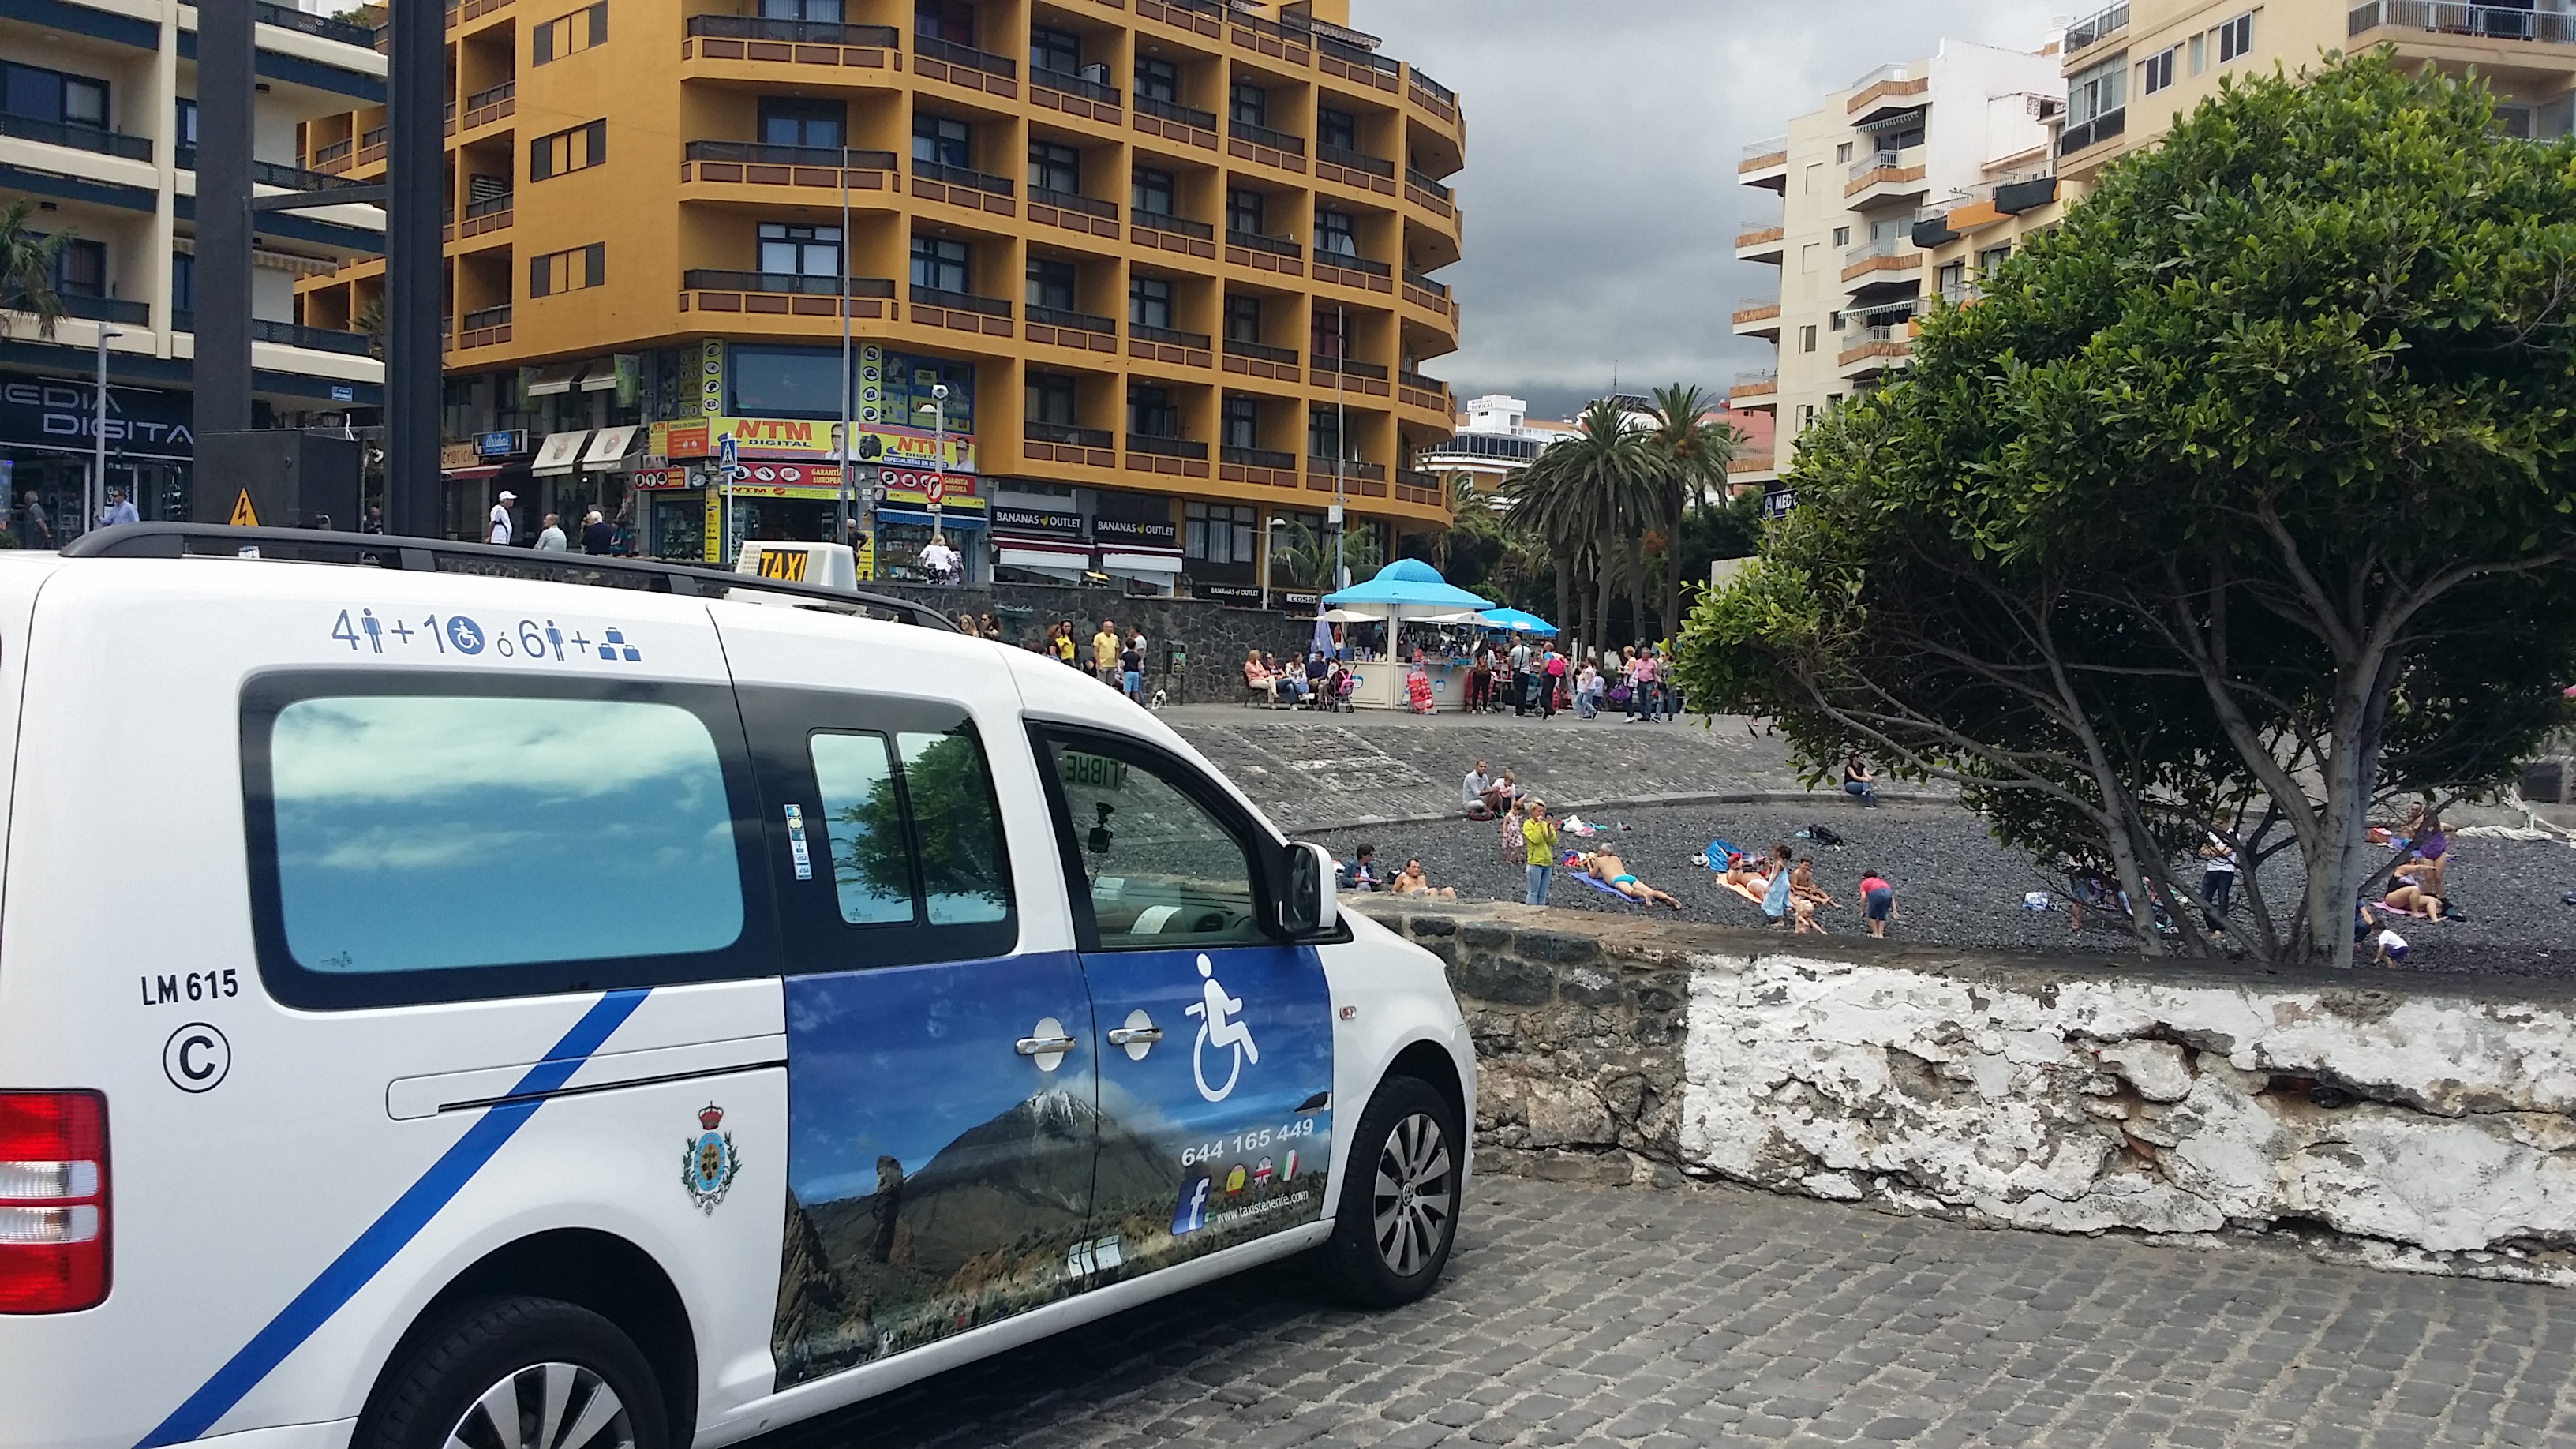 Images Taxistenerife, Adaptado en Tenerife